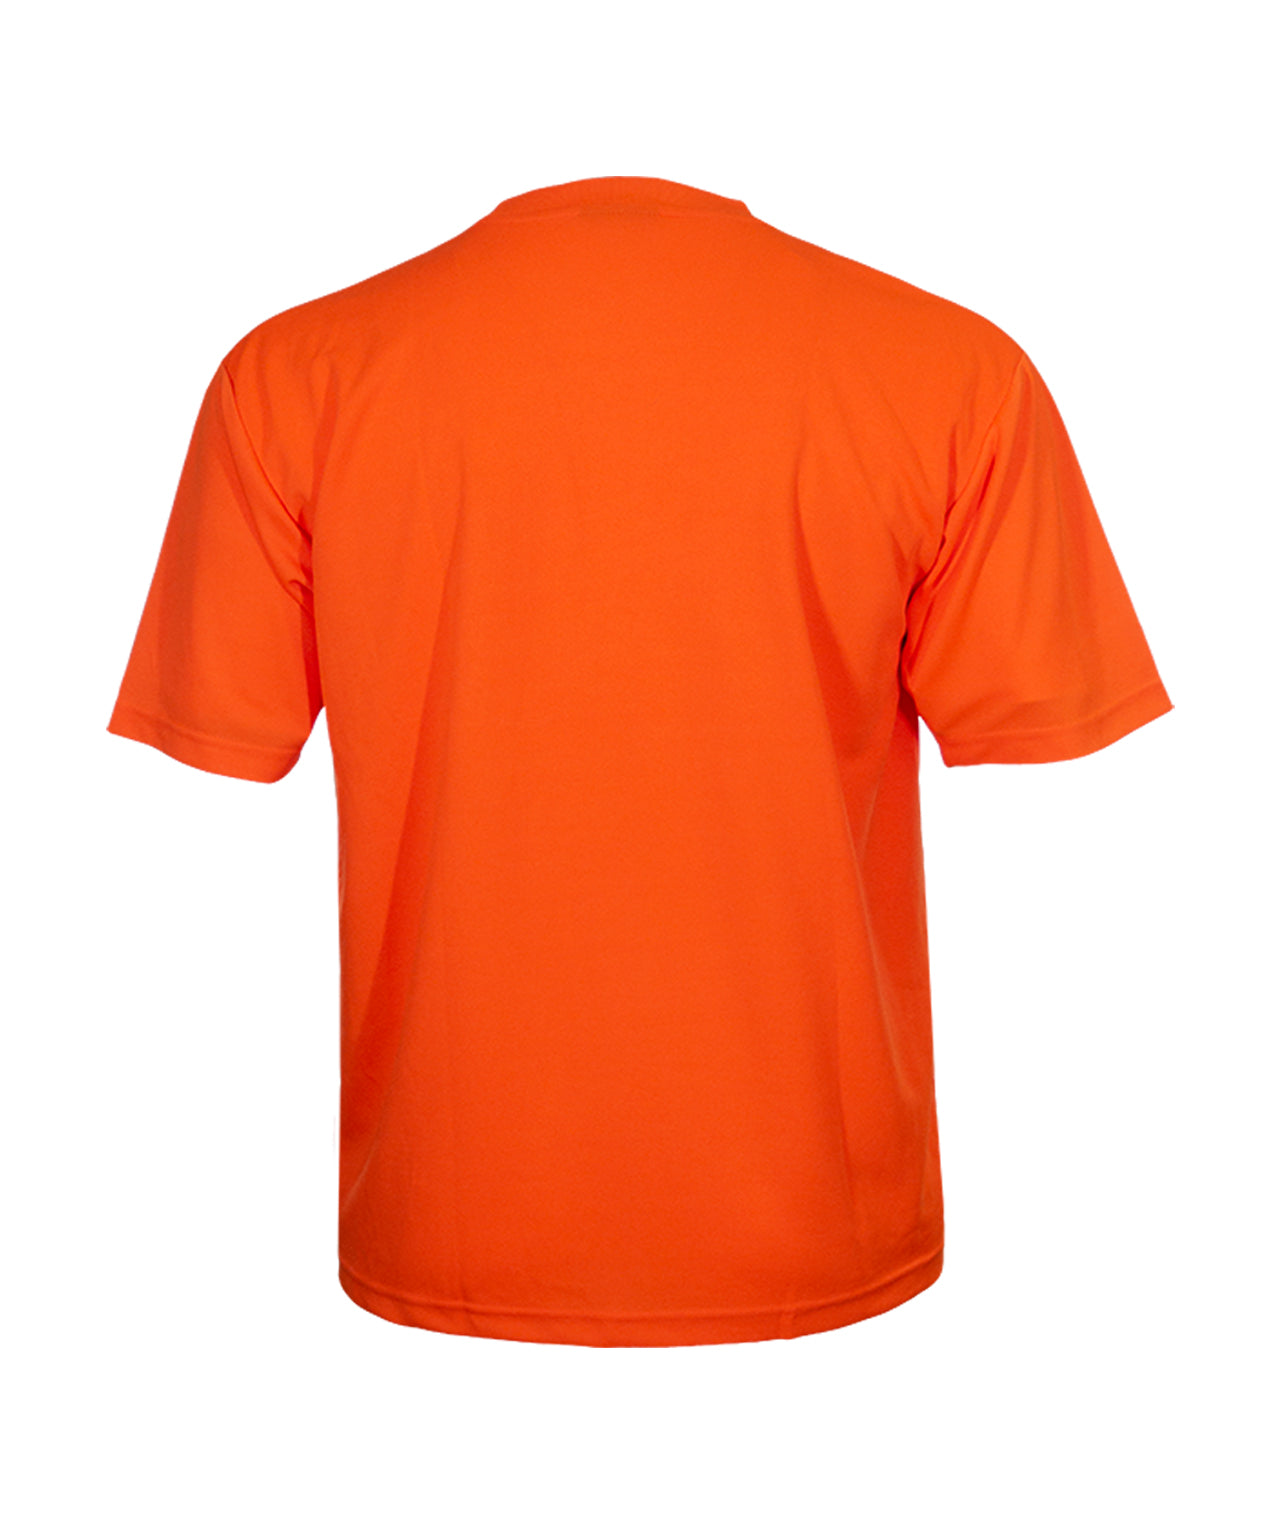 100BOR Hi-Vis Orange Birdseye Knit Pocket Safety Shirt